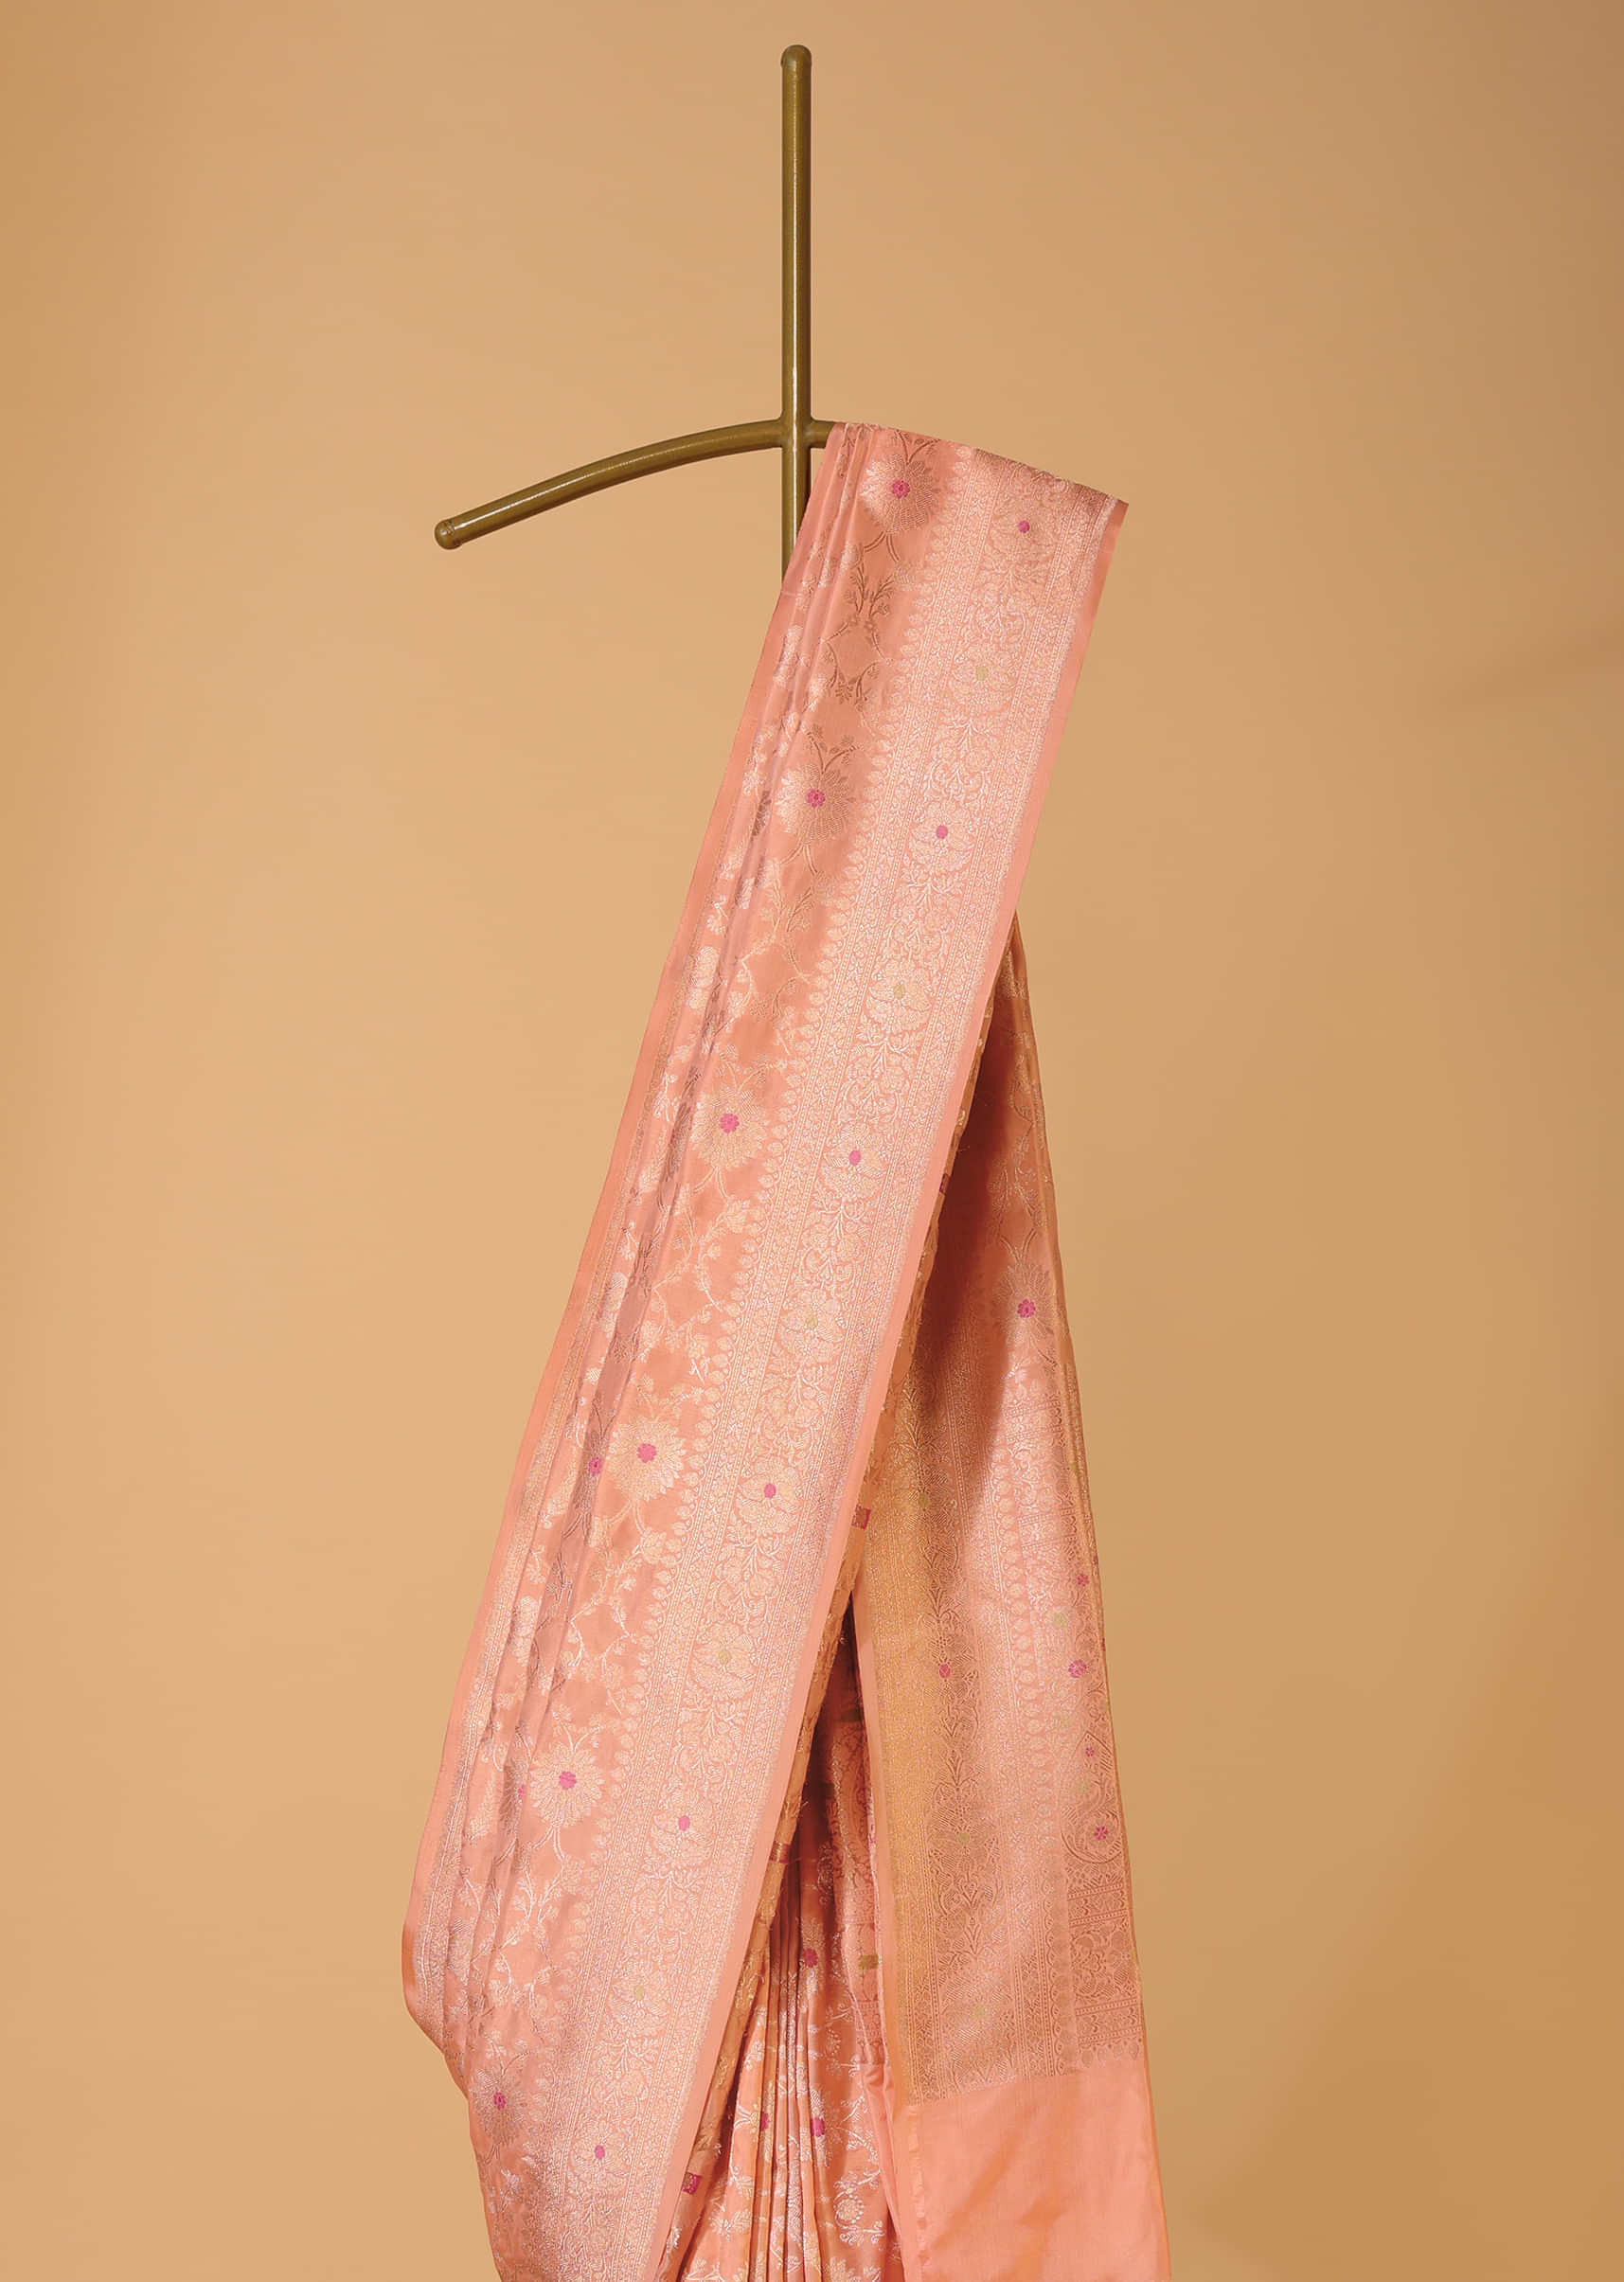 Light Peach Pink Handloom Banarasi Saree In Uppada Silk With Meenakari Weave